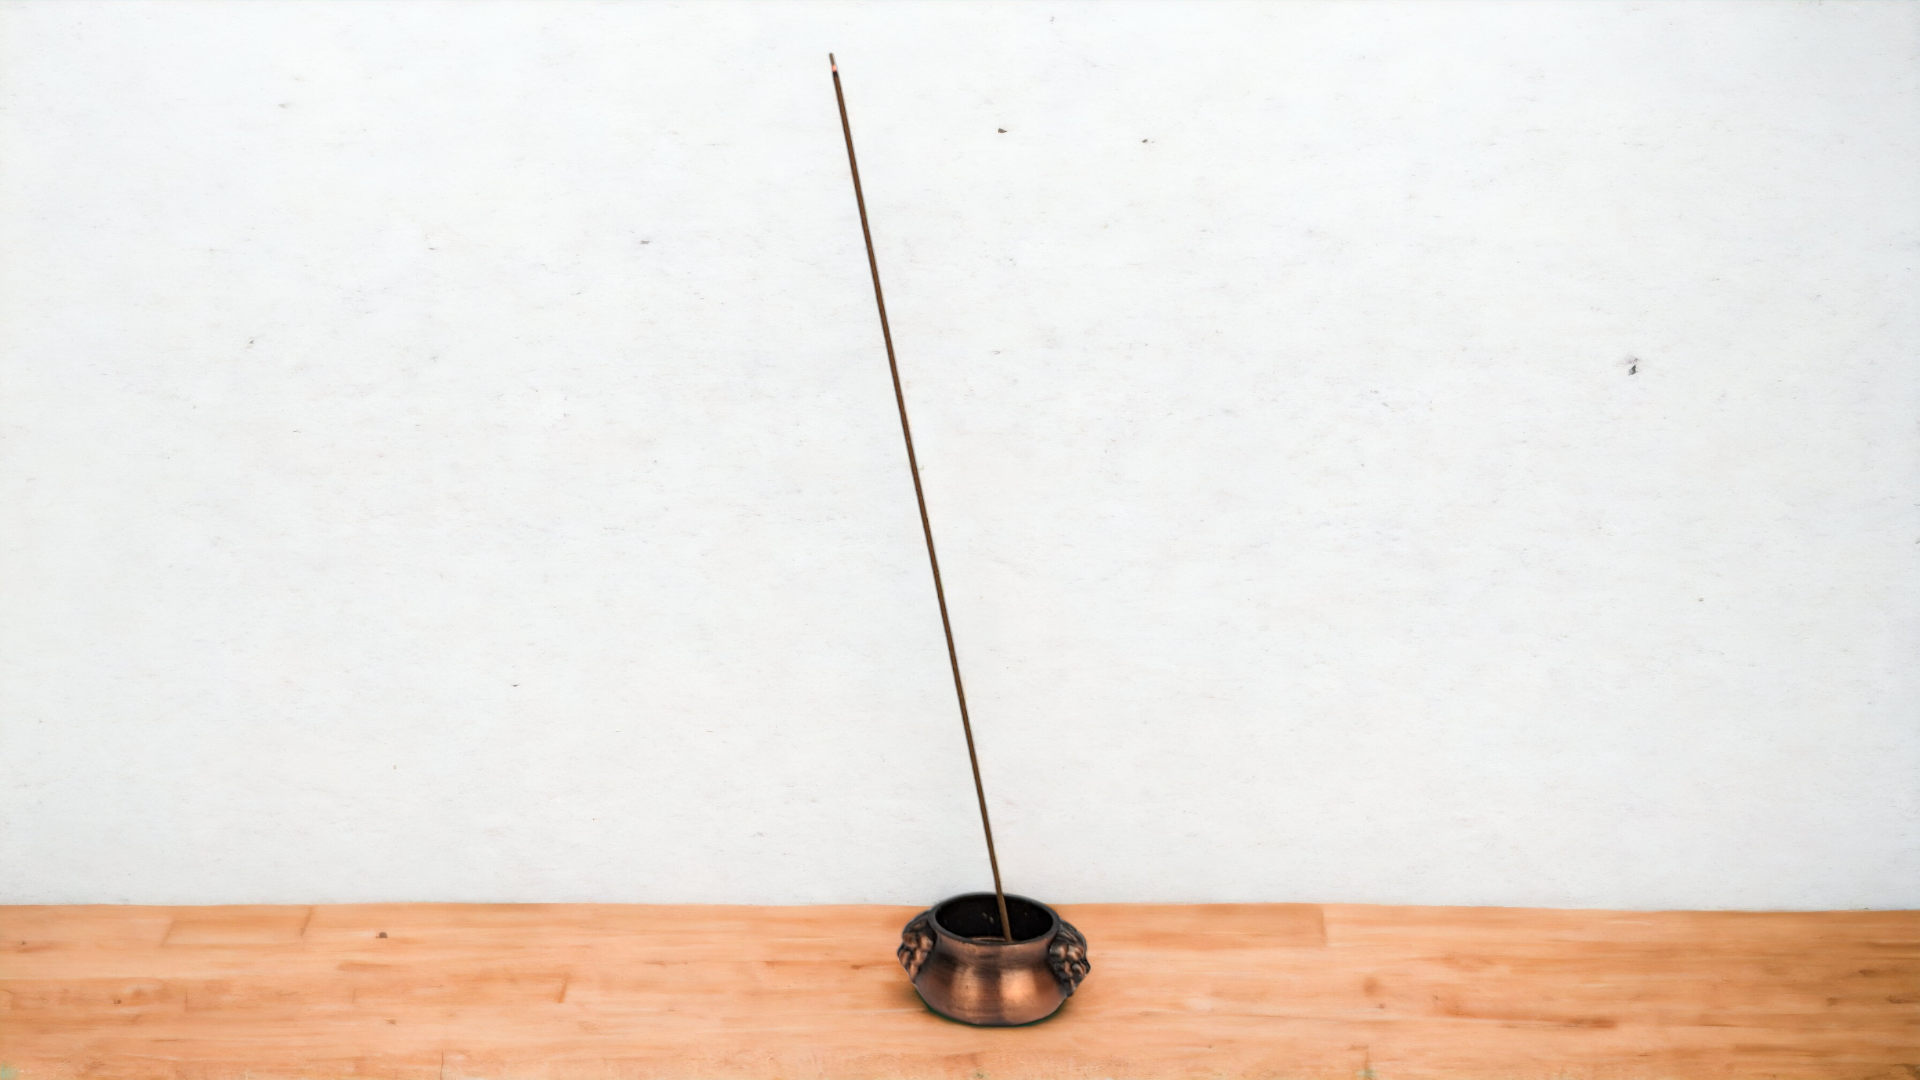 Mini Cauldron Copper Incense holder 4cm -